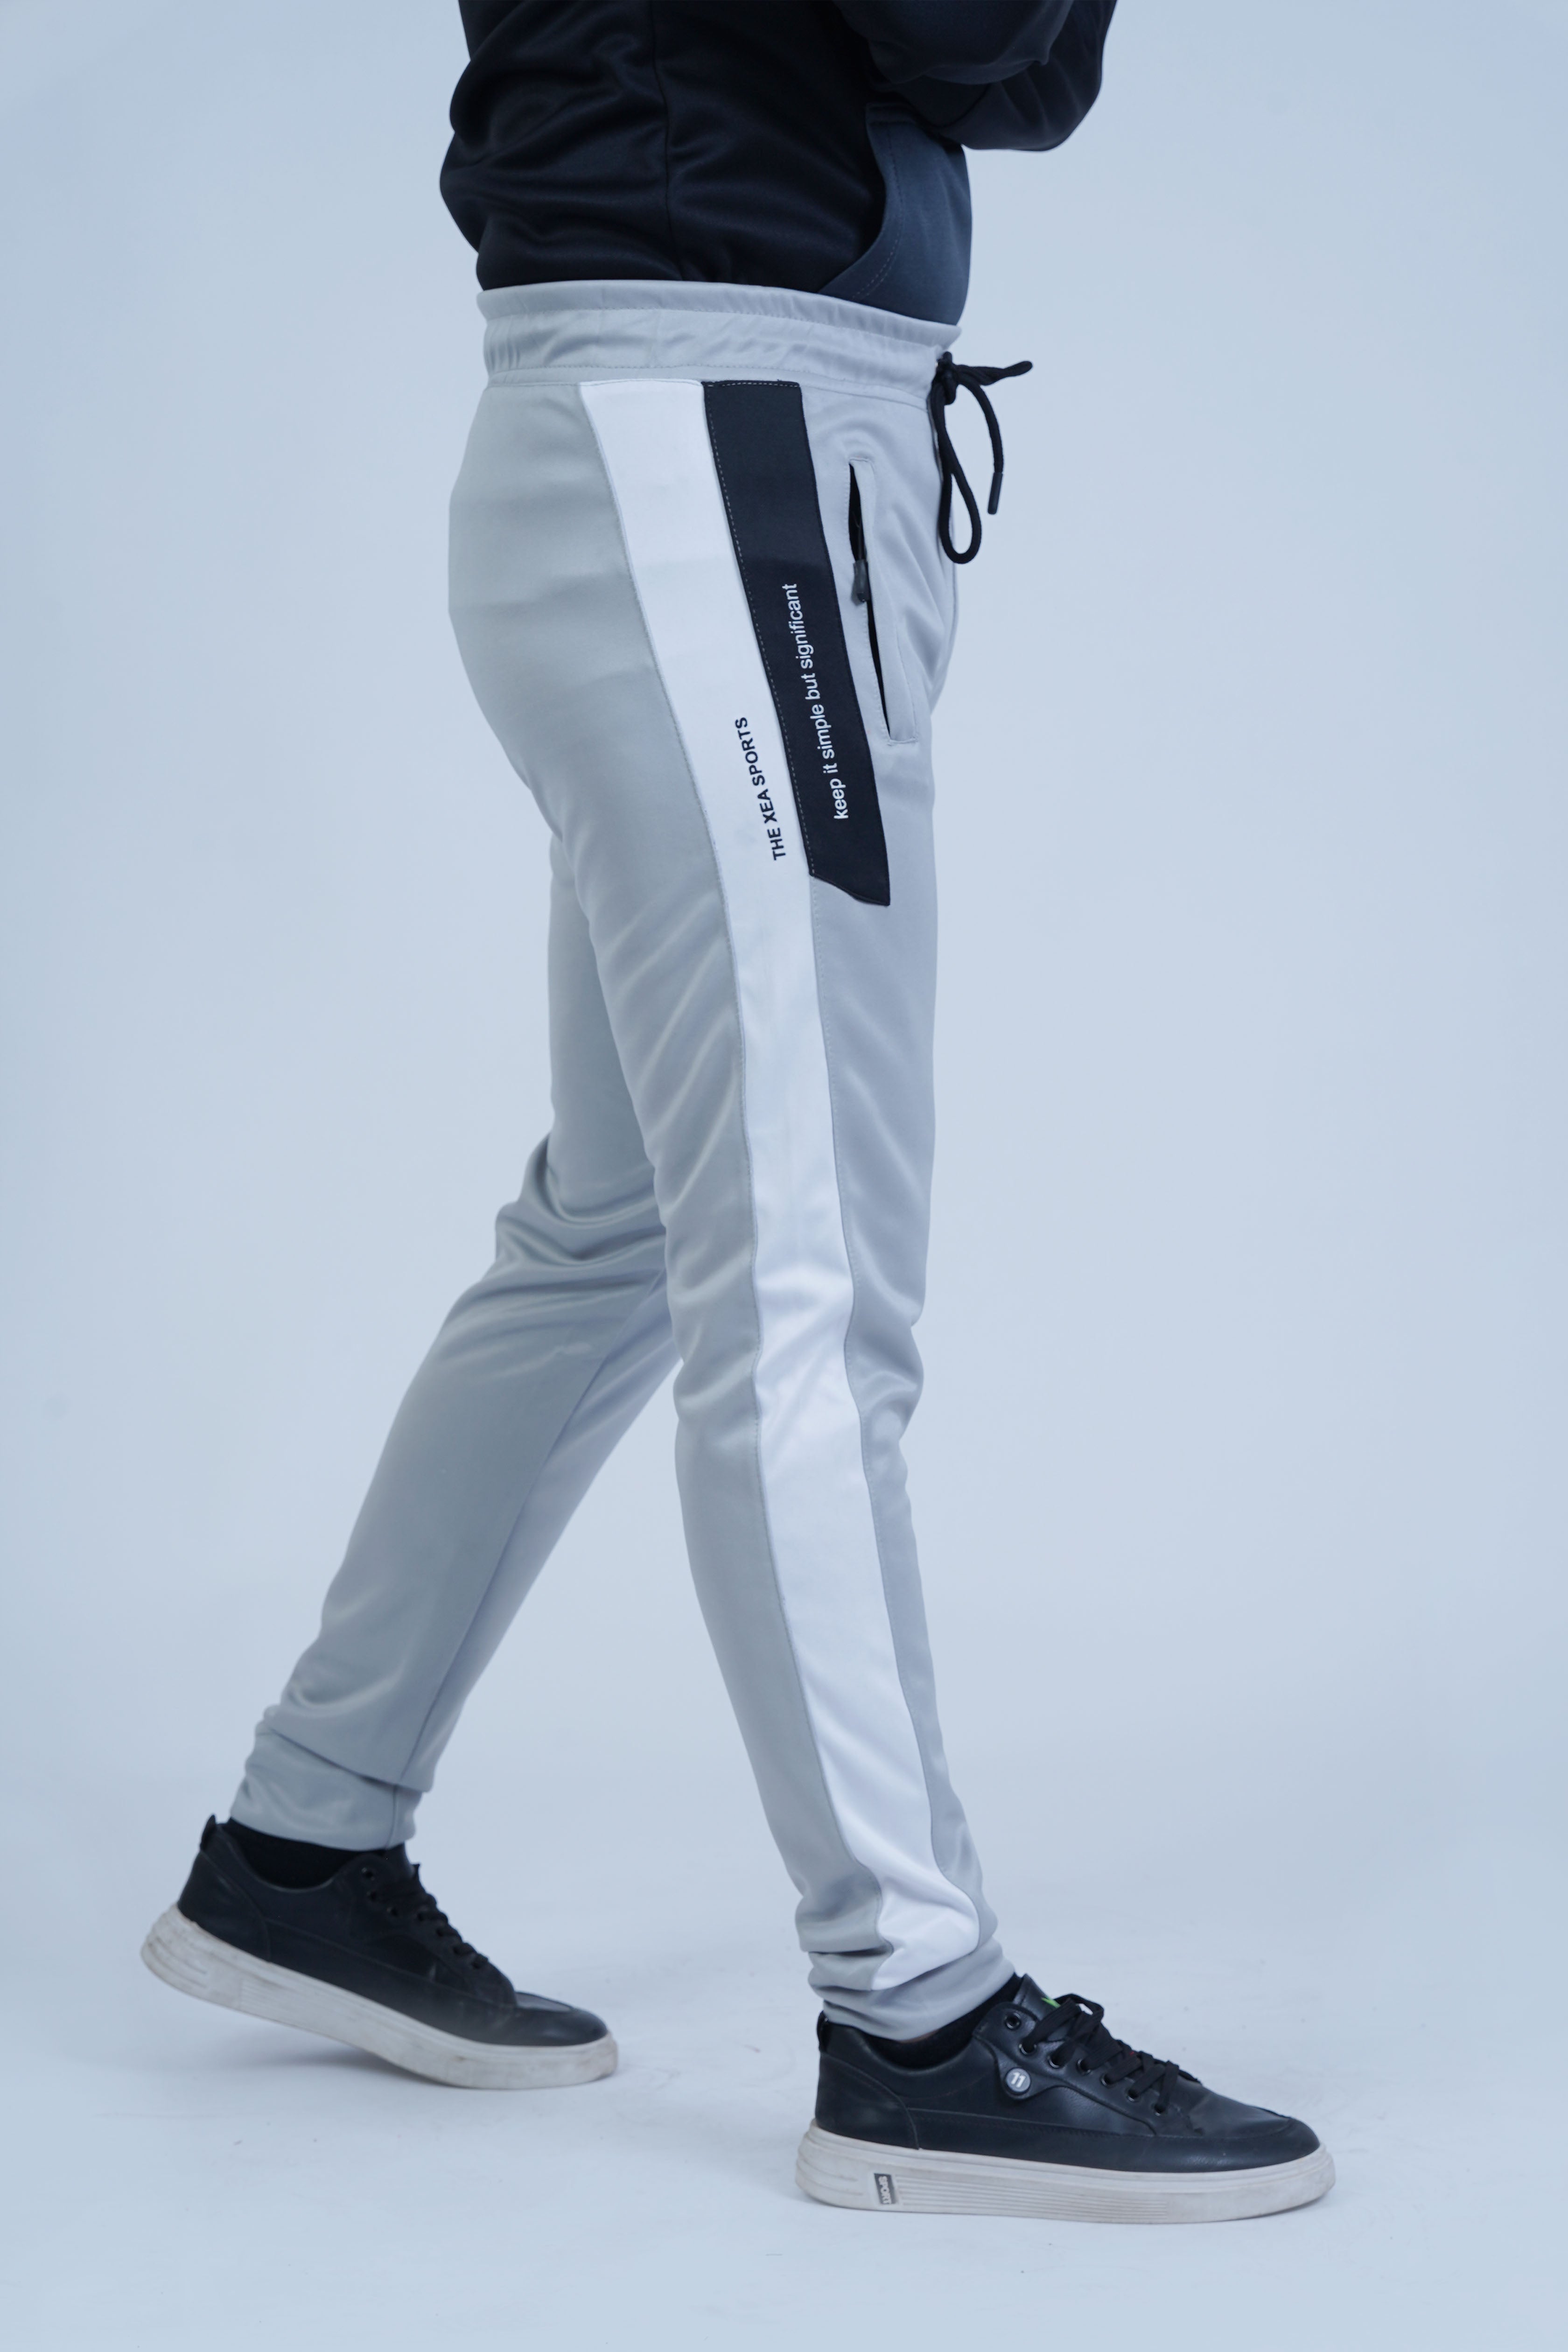 Edition Pro Silver Grey Men Trouser - The Xea Men's Clothing